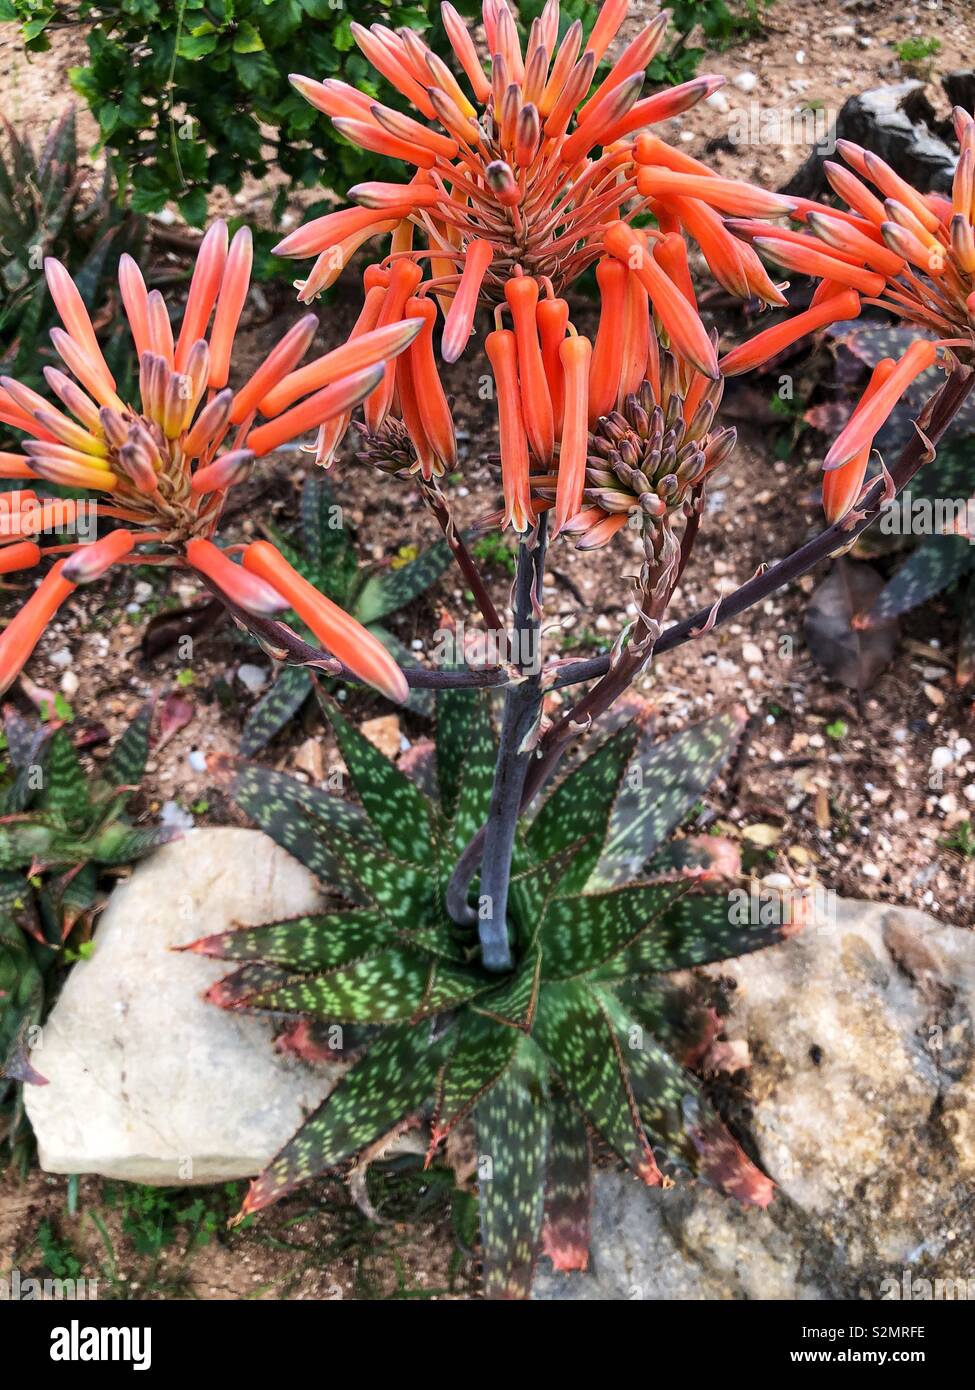 Cactus flowering in a Mediterranean rockery garden, Spain Stock Photo